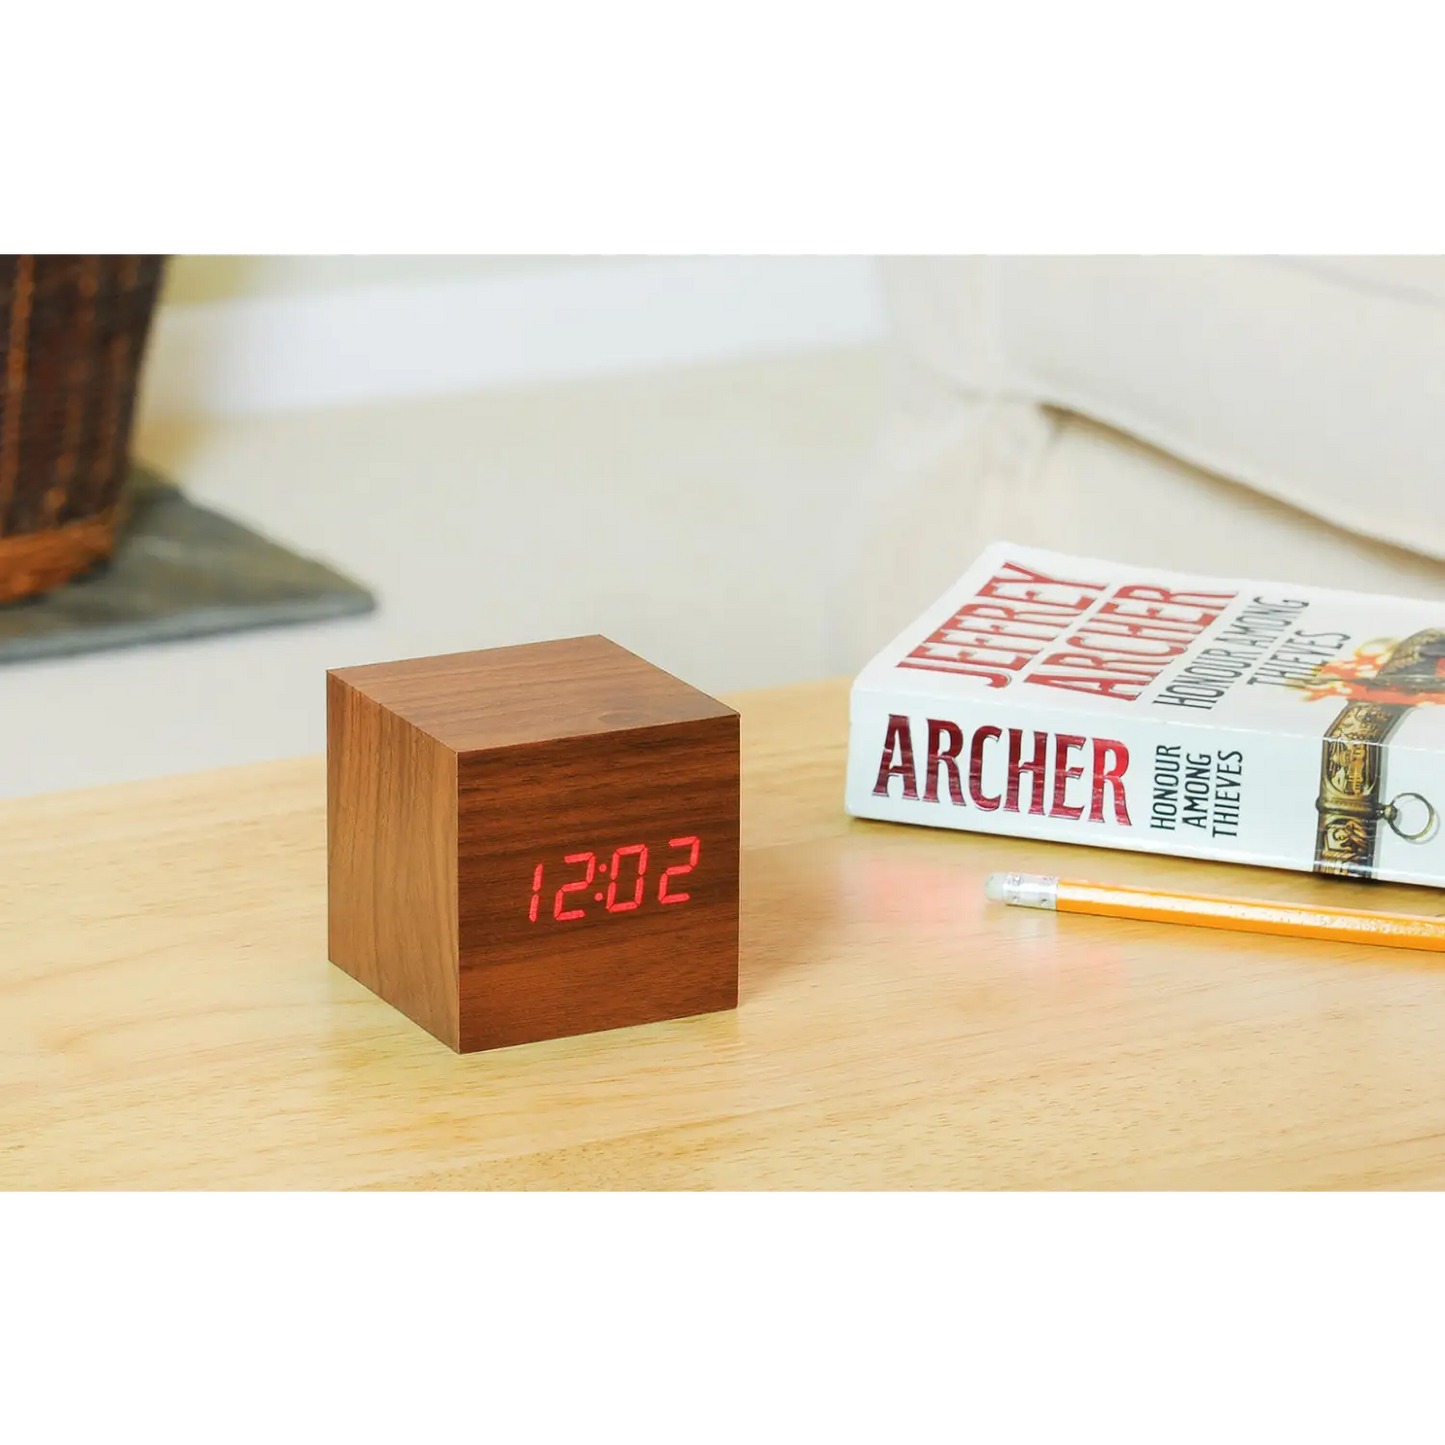 Gingko Cube Click Clock 2.5 x 2.5 Red LED Alarm Clock